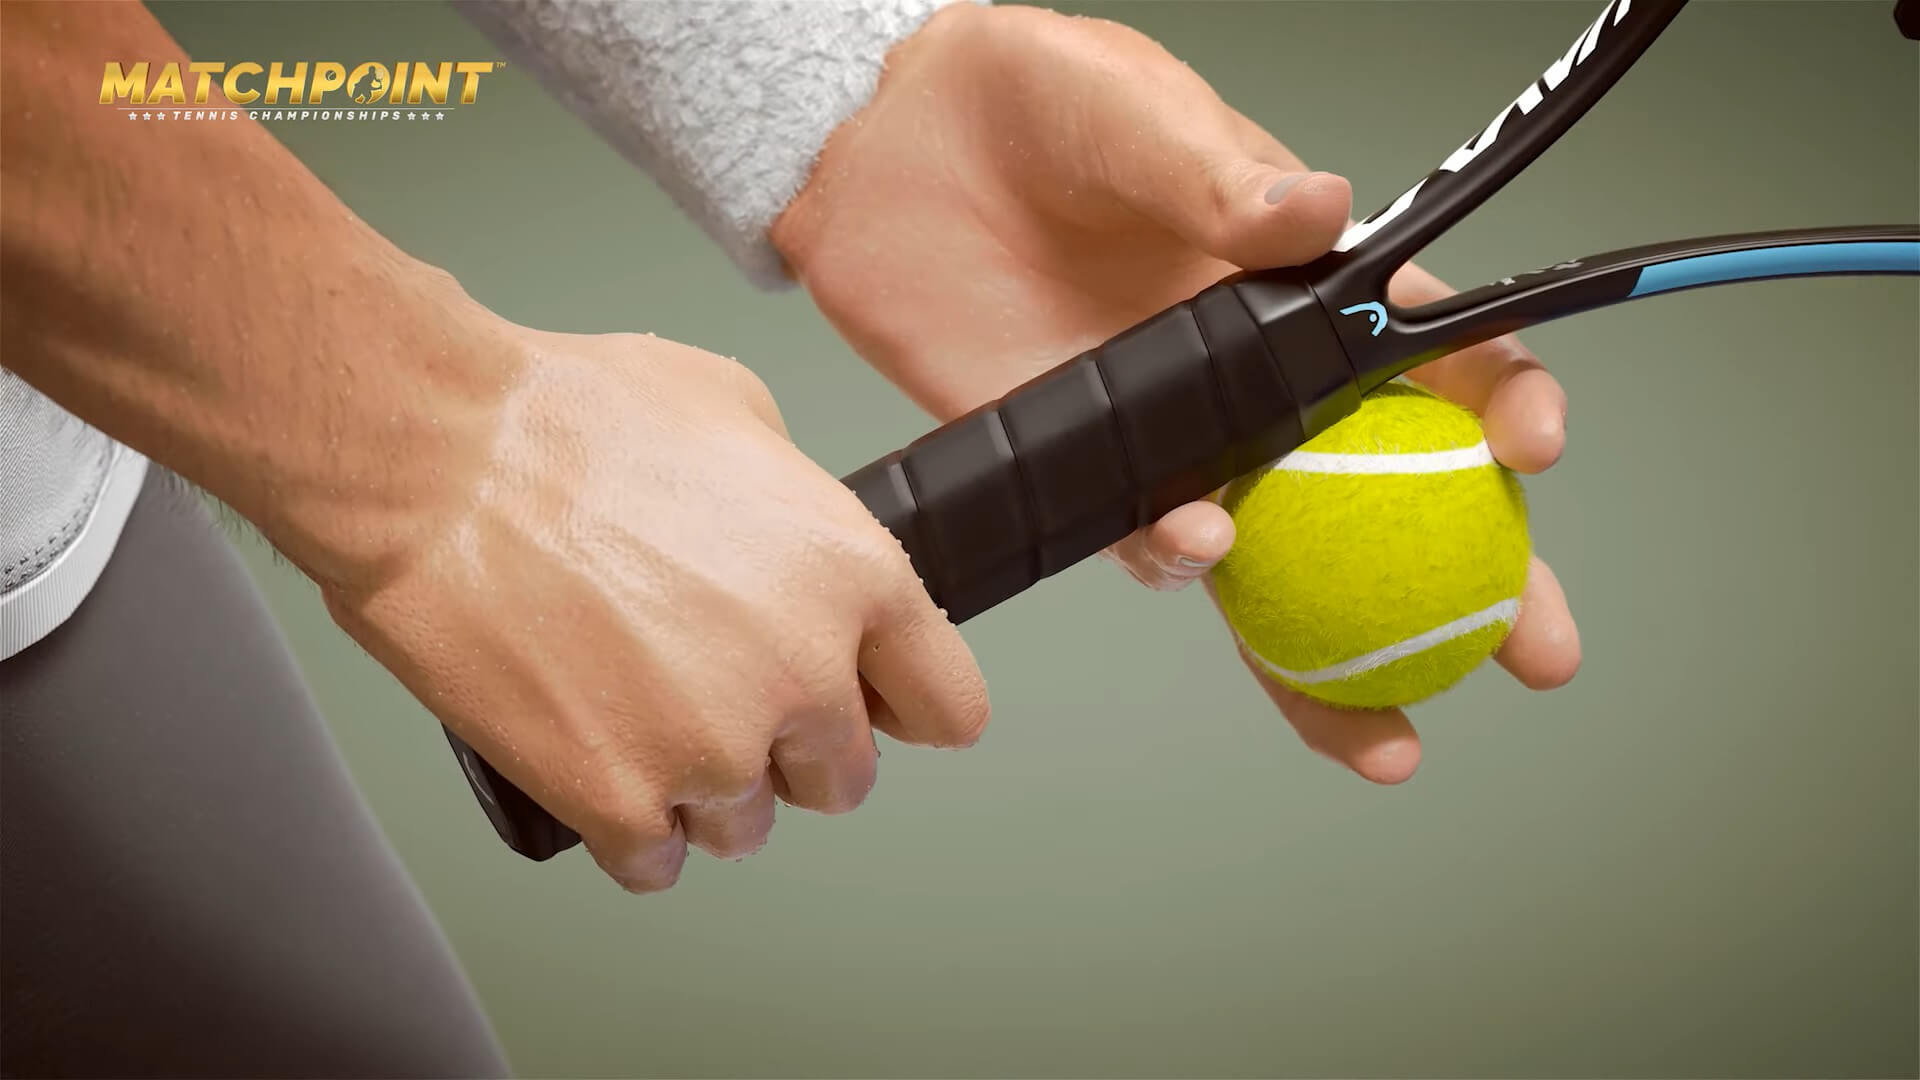 Matchpoint - Tennis Championships уже можно опробовать на Xbox